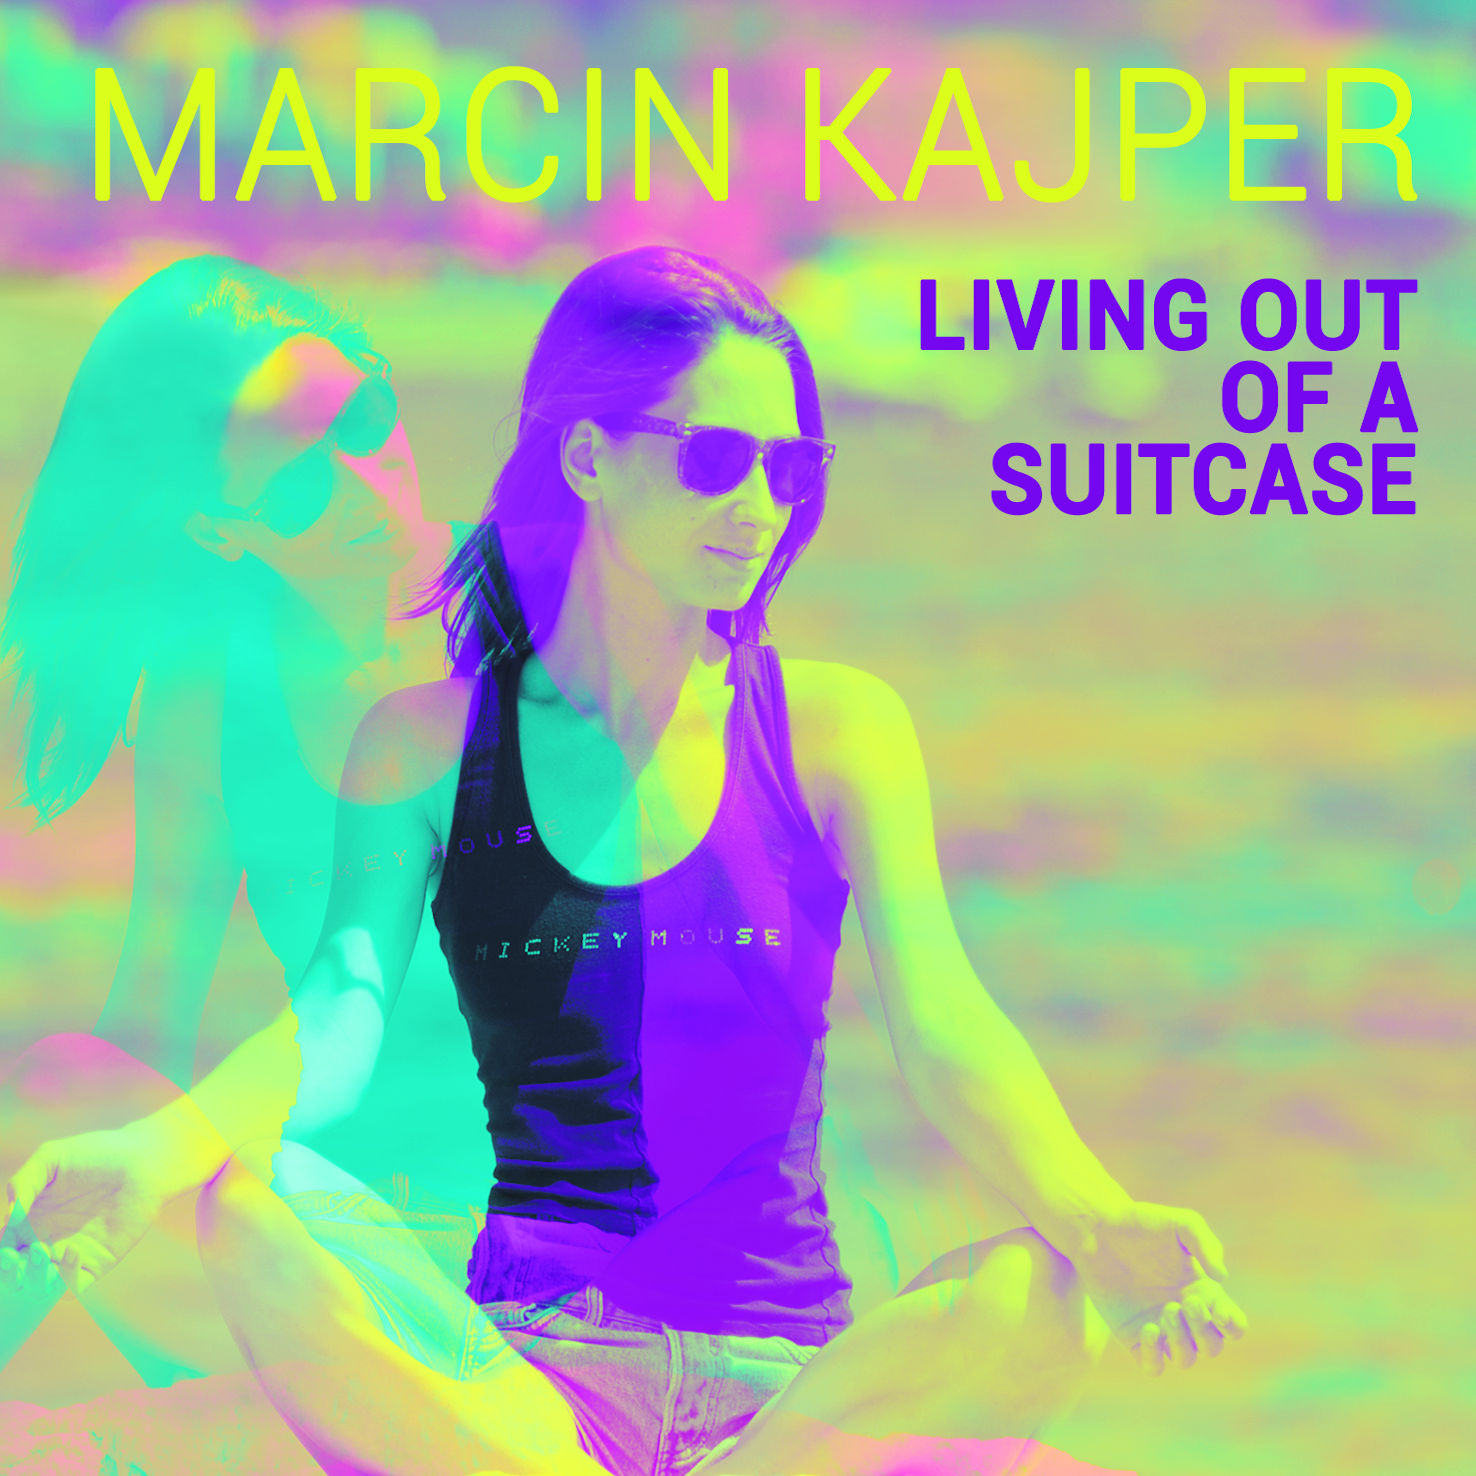 Marcin Kajper - [2019] Living out of a suitcase
(Soltan Art Group)